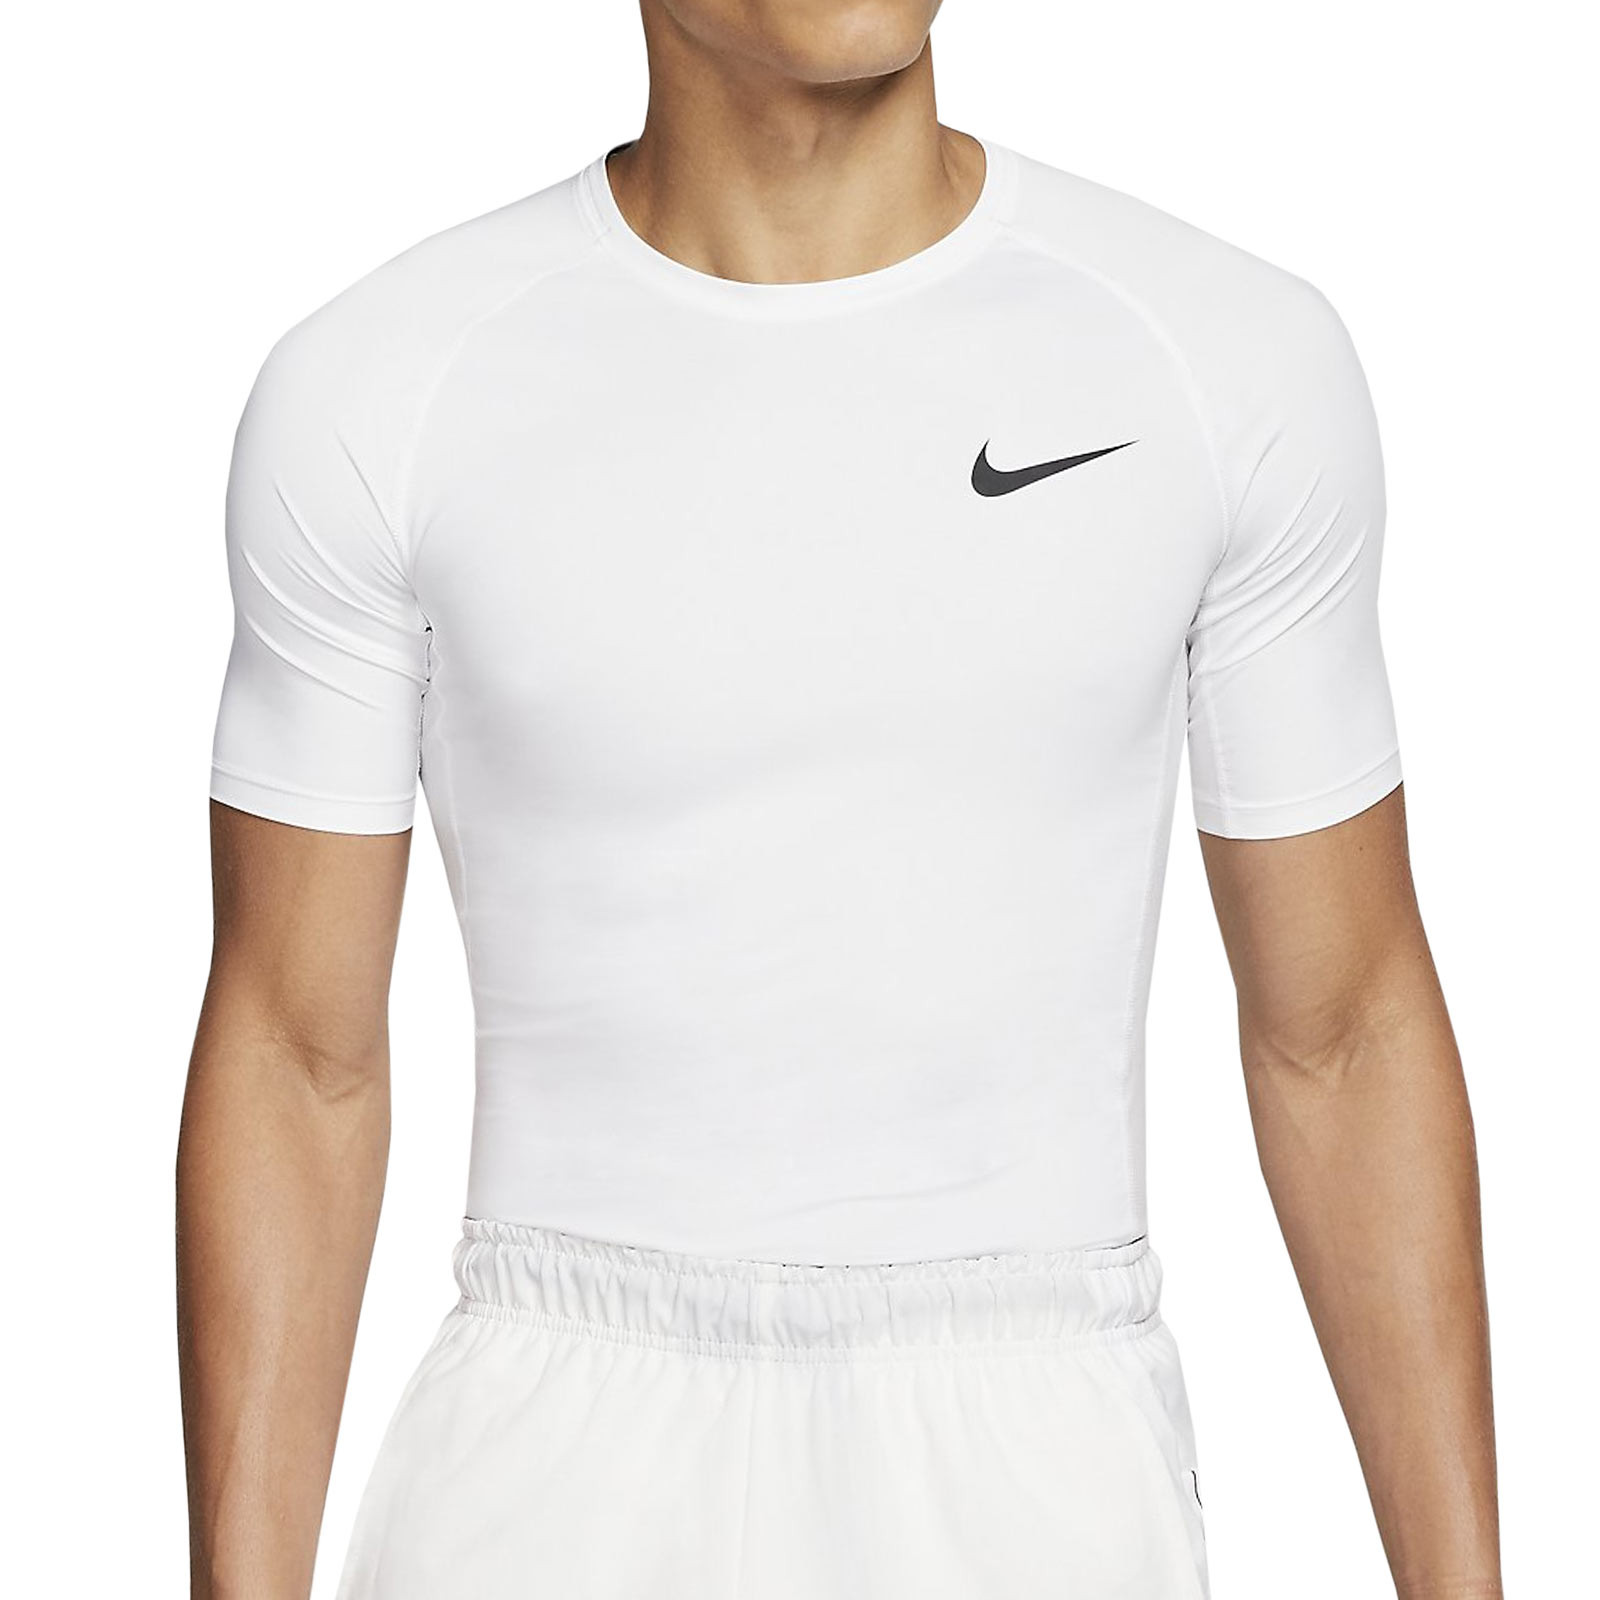 Chaise longue por supuesto Golpe fuerte Camiseta interior térmica Nike Pro blanca | futbolmania